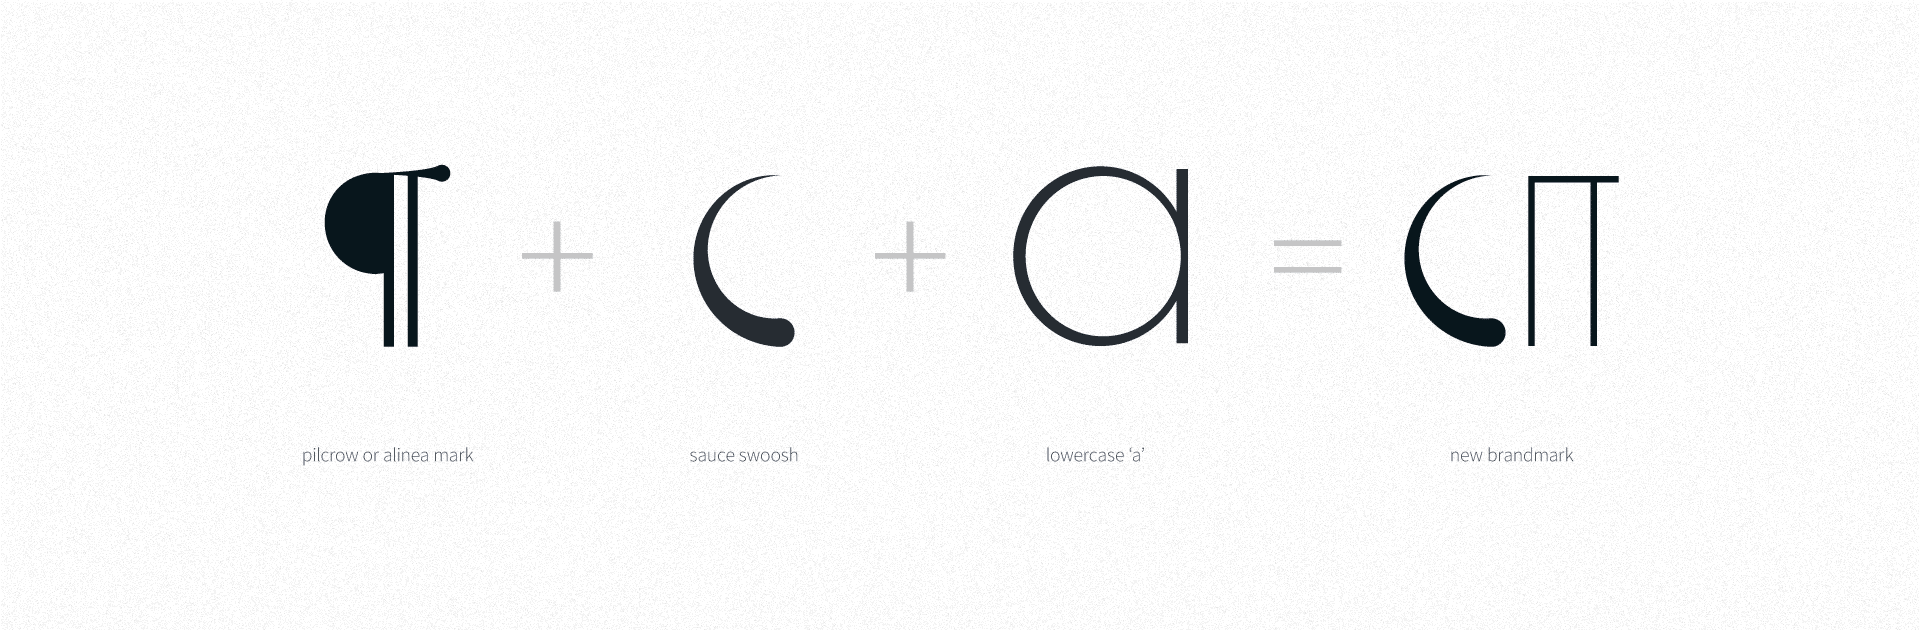 alinea-branding-logo-breakdown2